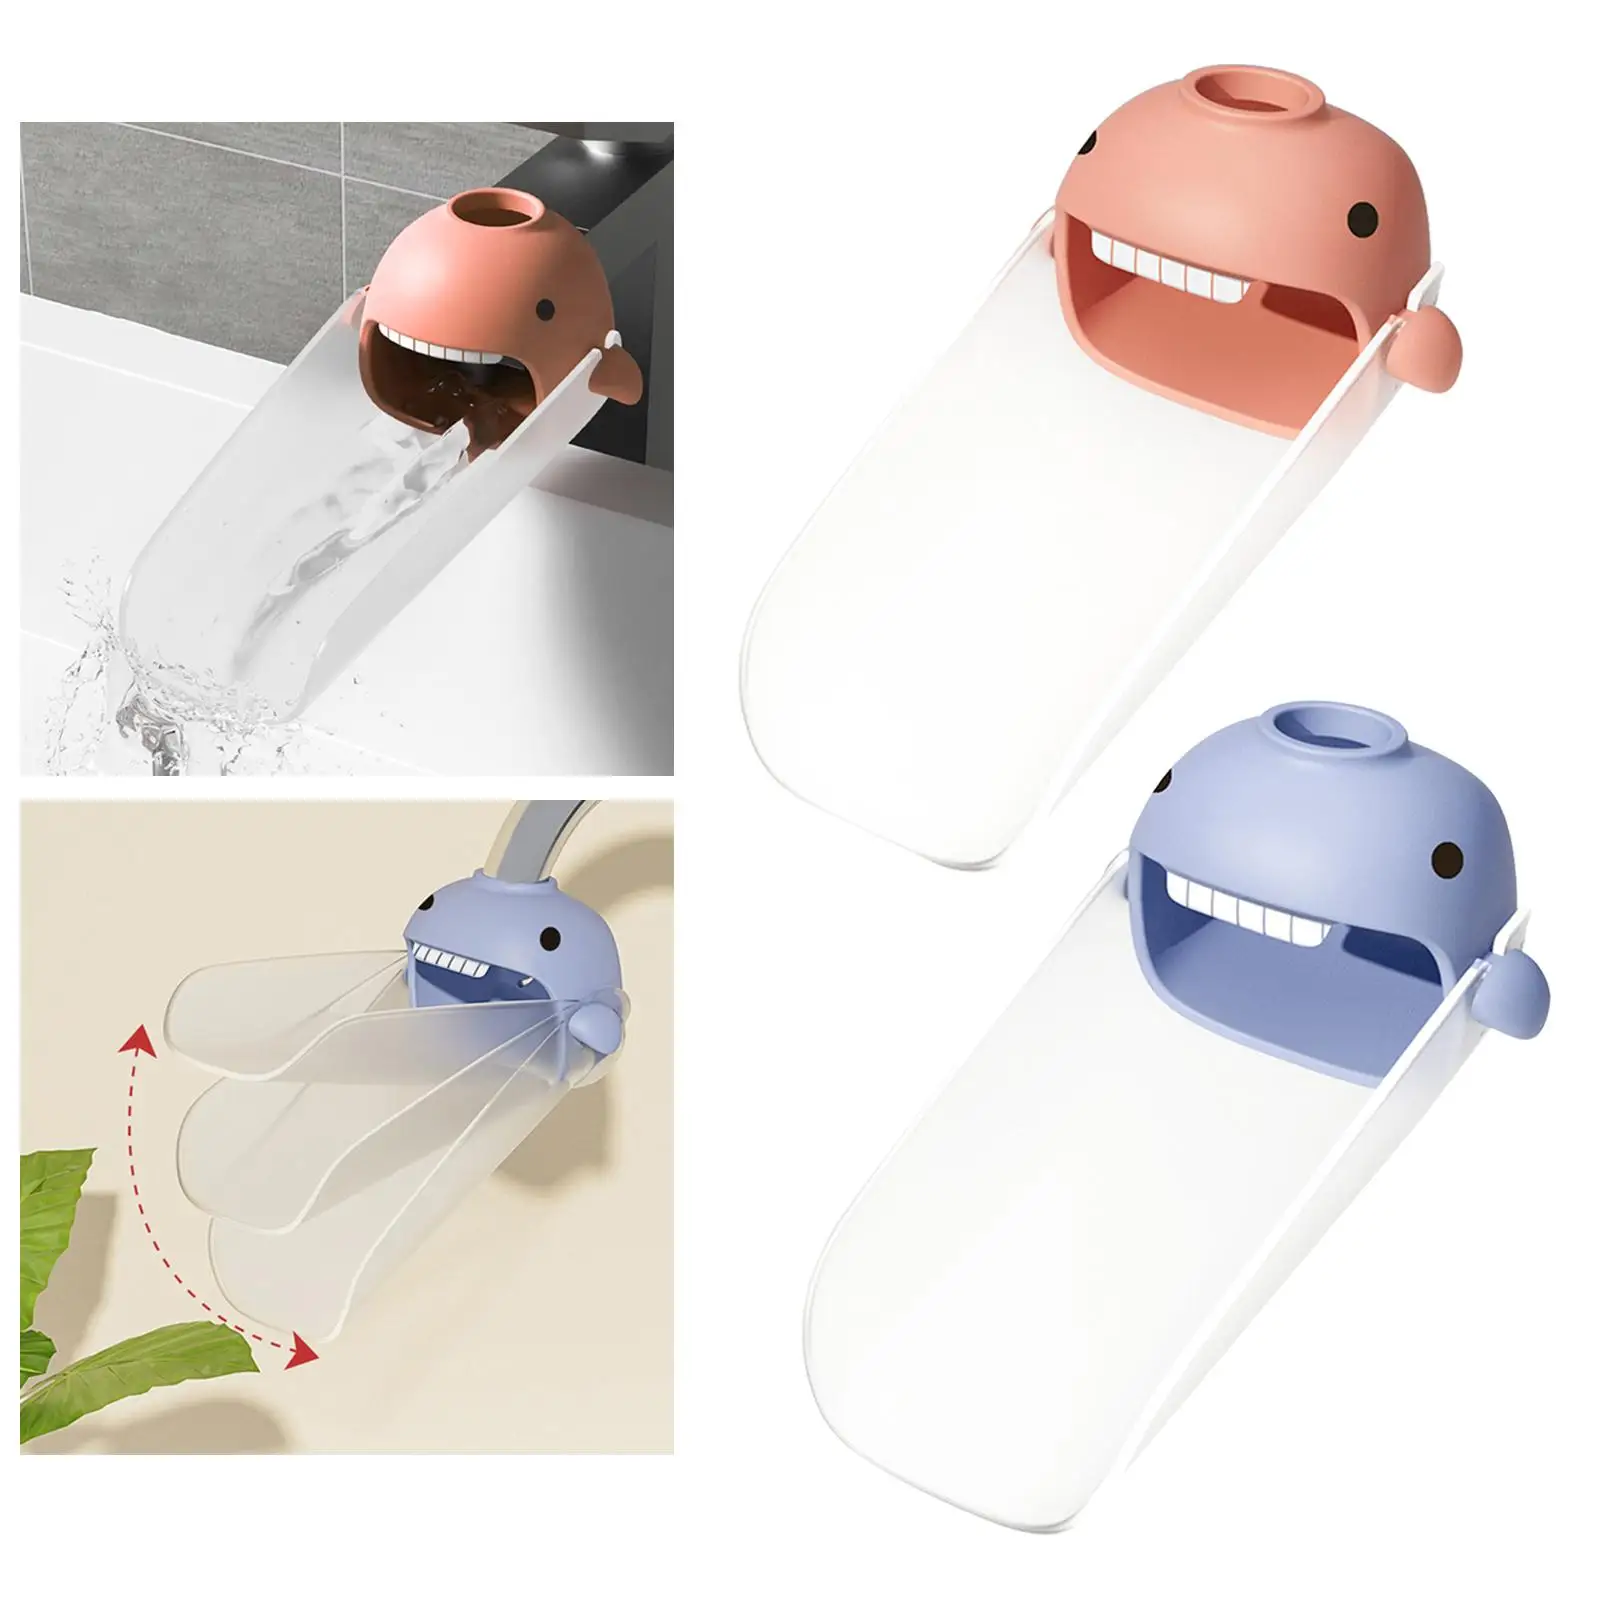 Cute Water Faucet Tap Extender 14cm water Saving Universal for Toddler